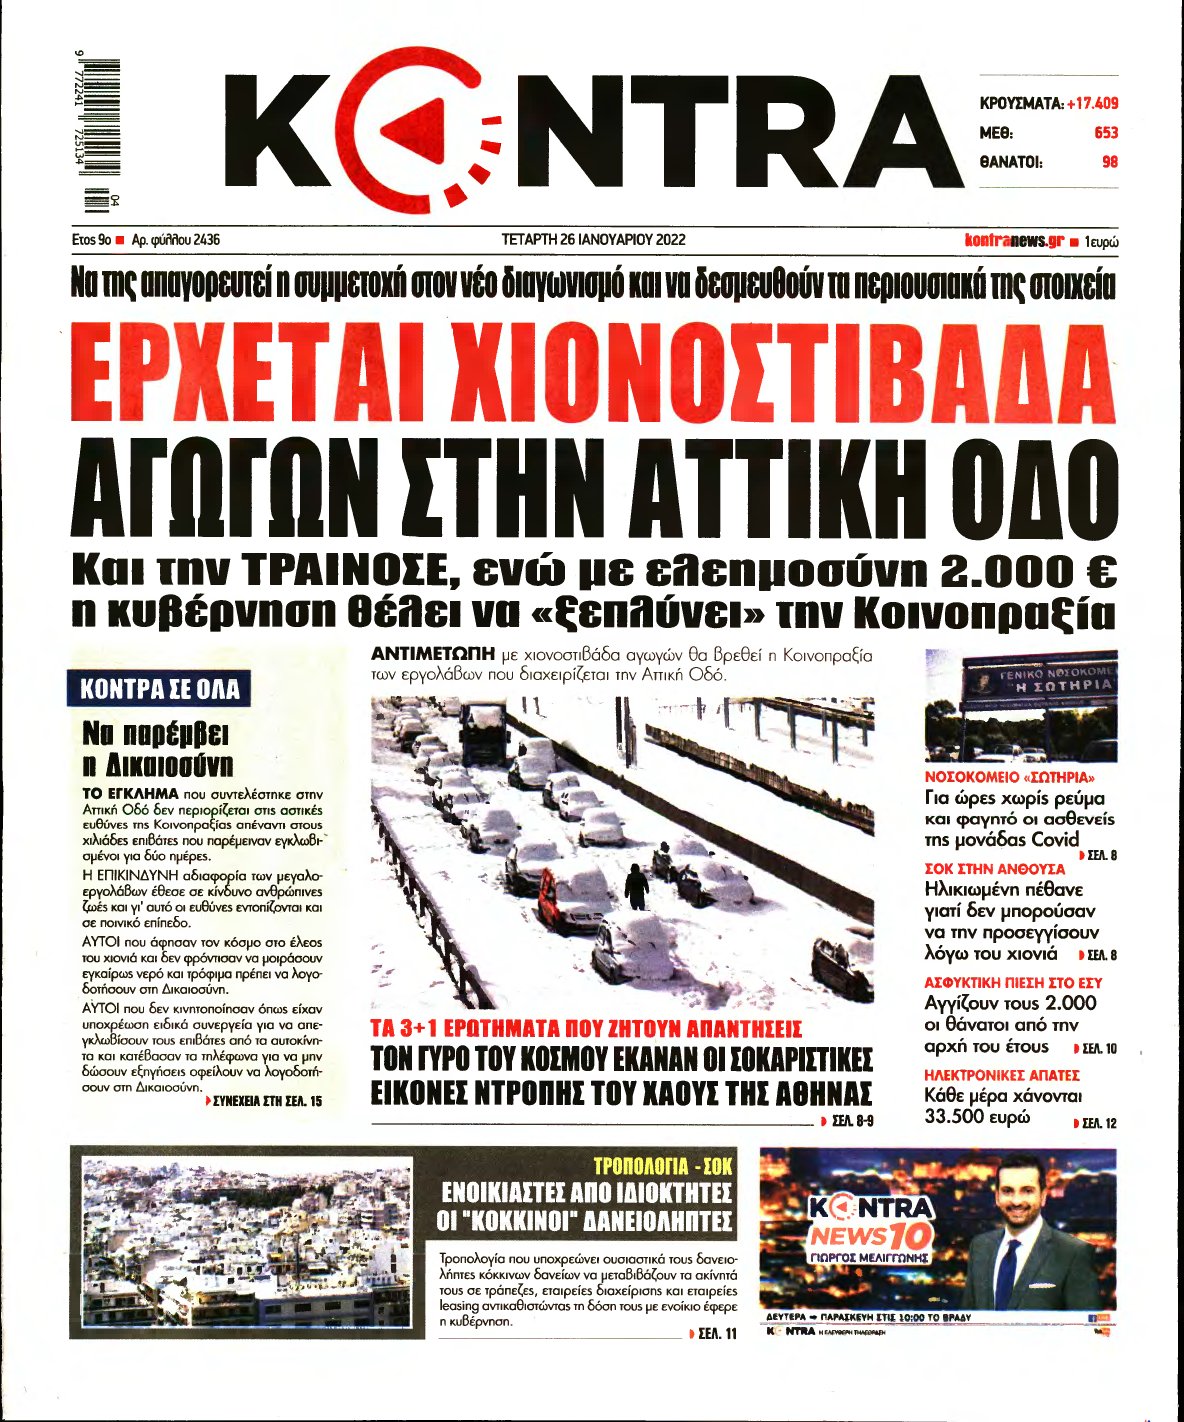 KONTRA NEWS – 26/01/2022